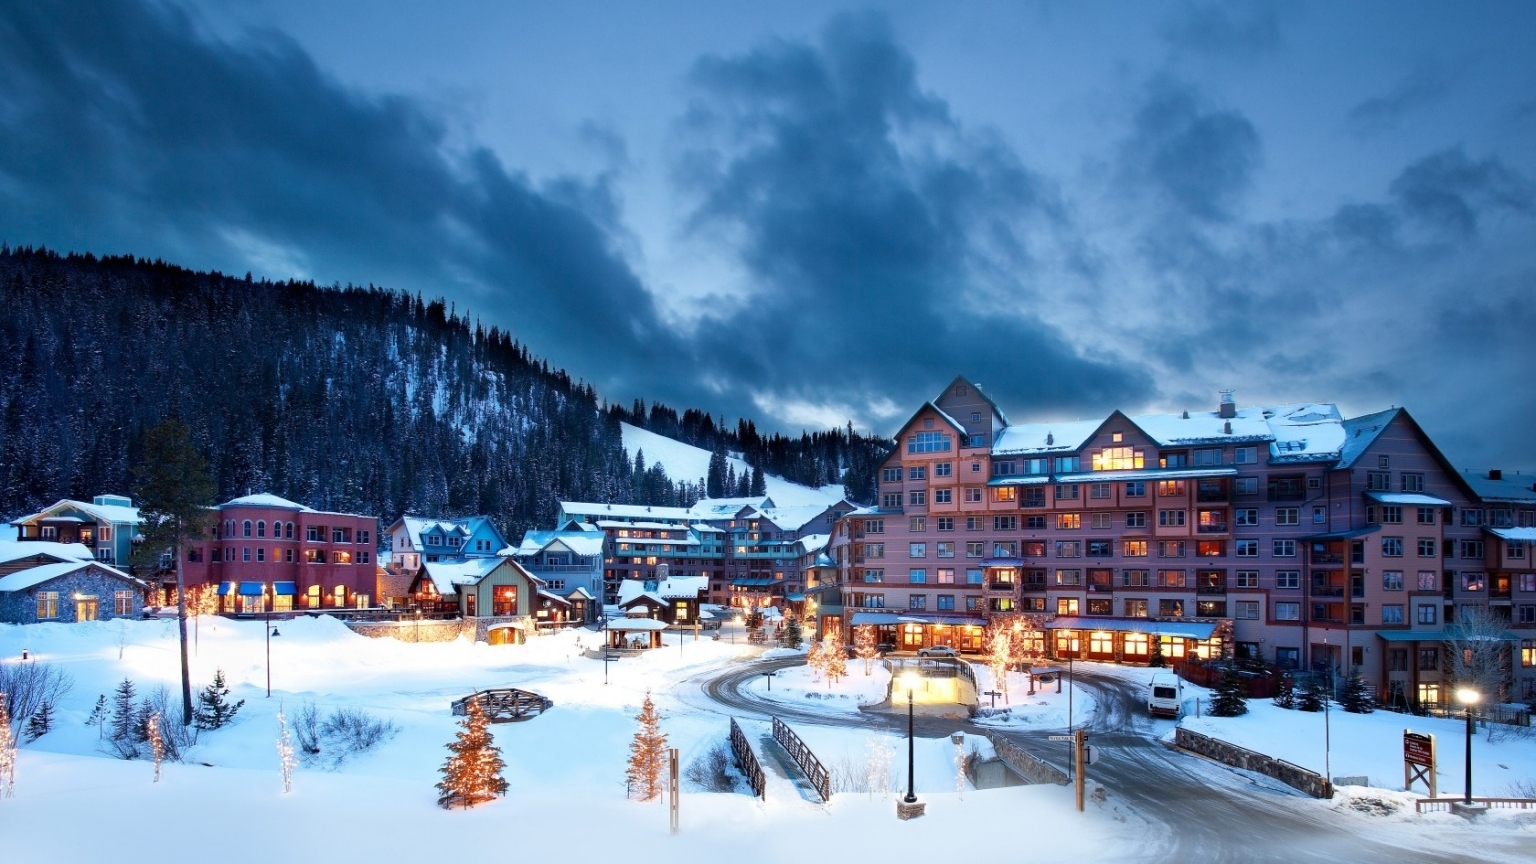 Aspen Colorado Ski Resort for 1536 x 864 HDTV resolution